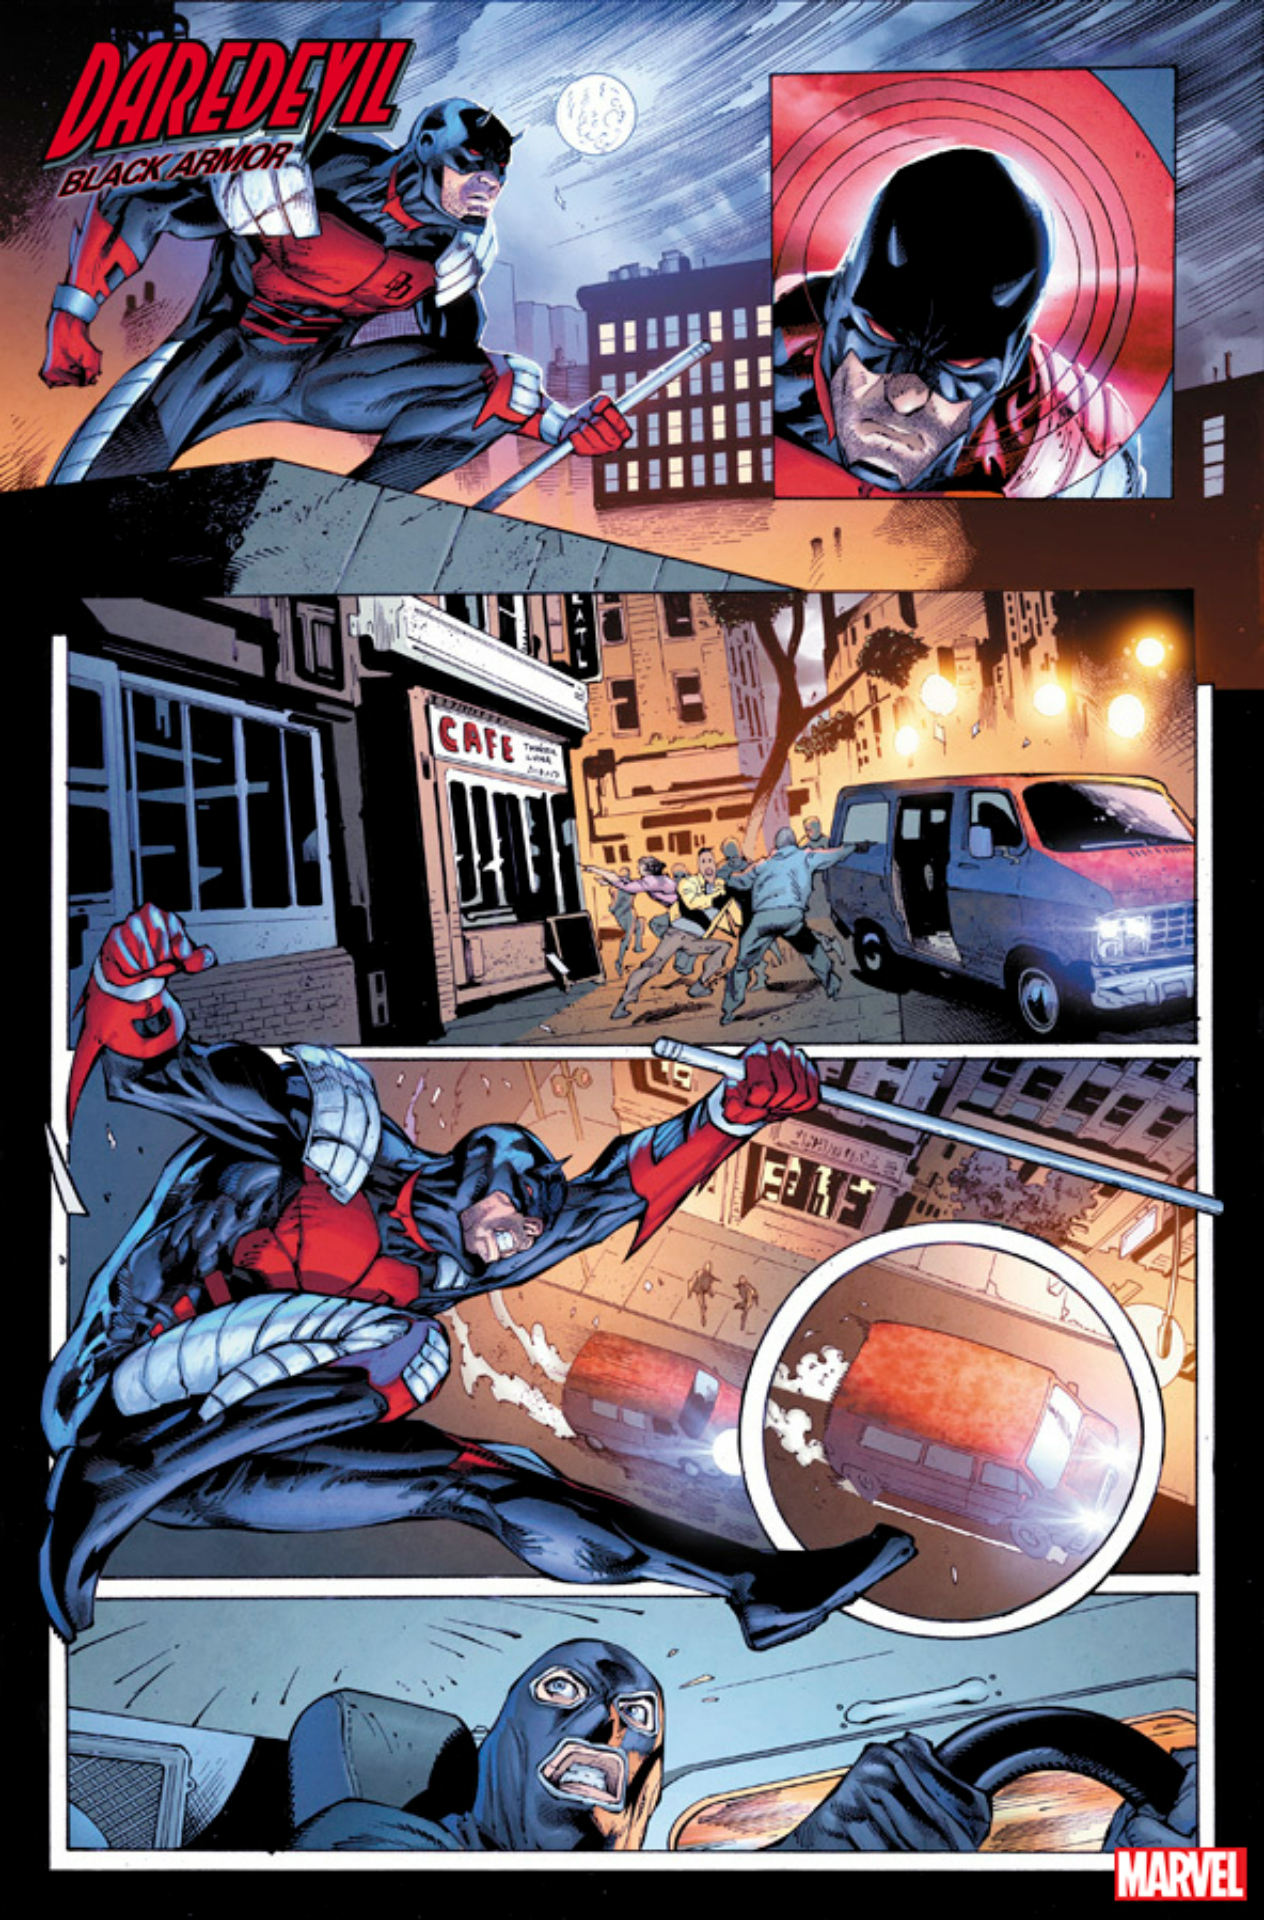 Daredevil: Black Armor #1, immagine interna